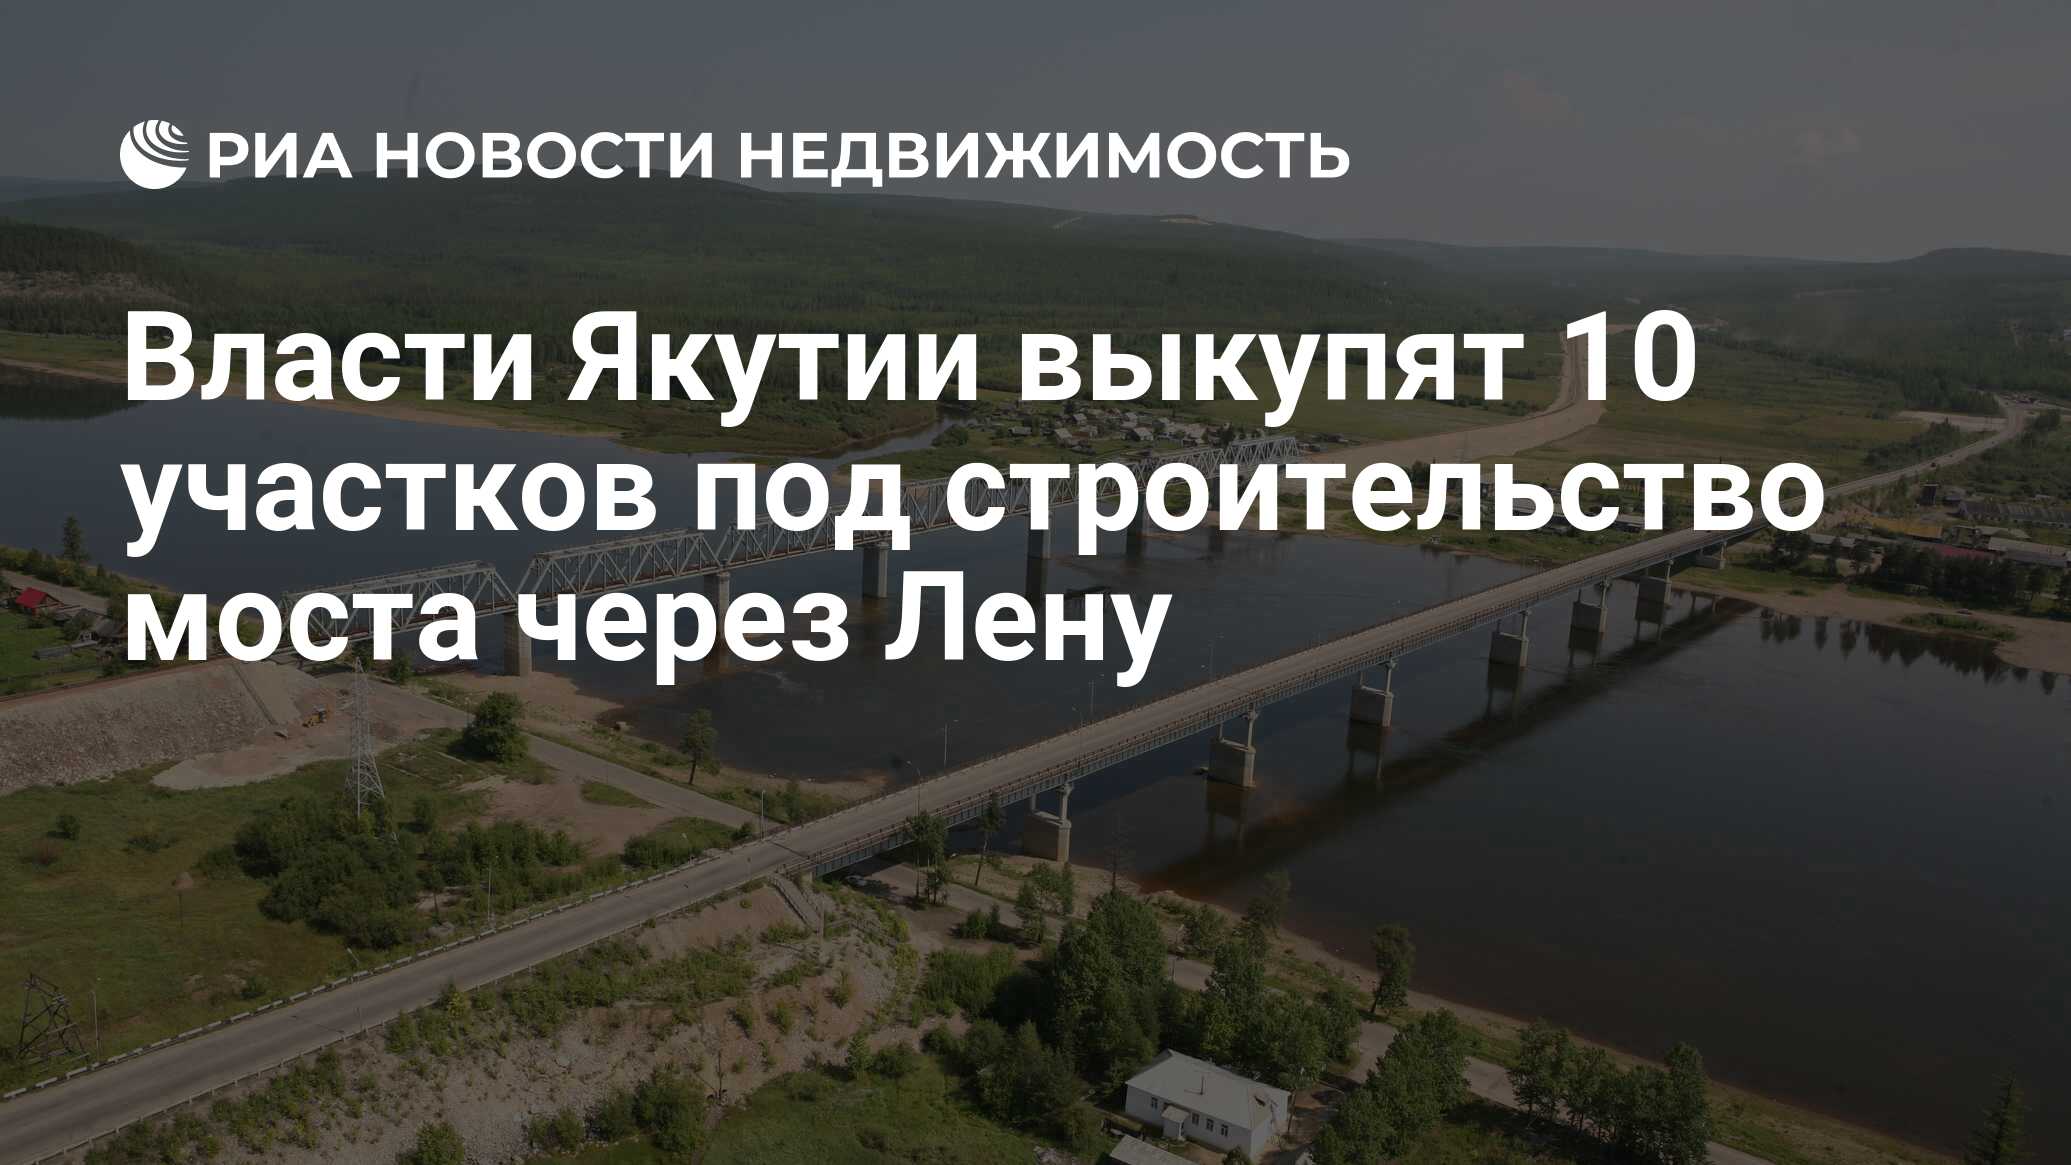 мост через лену в якутске